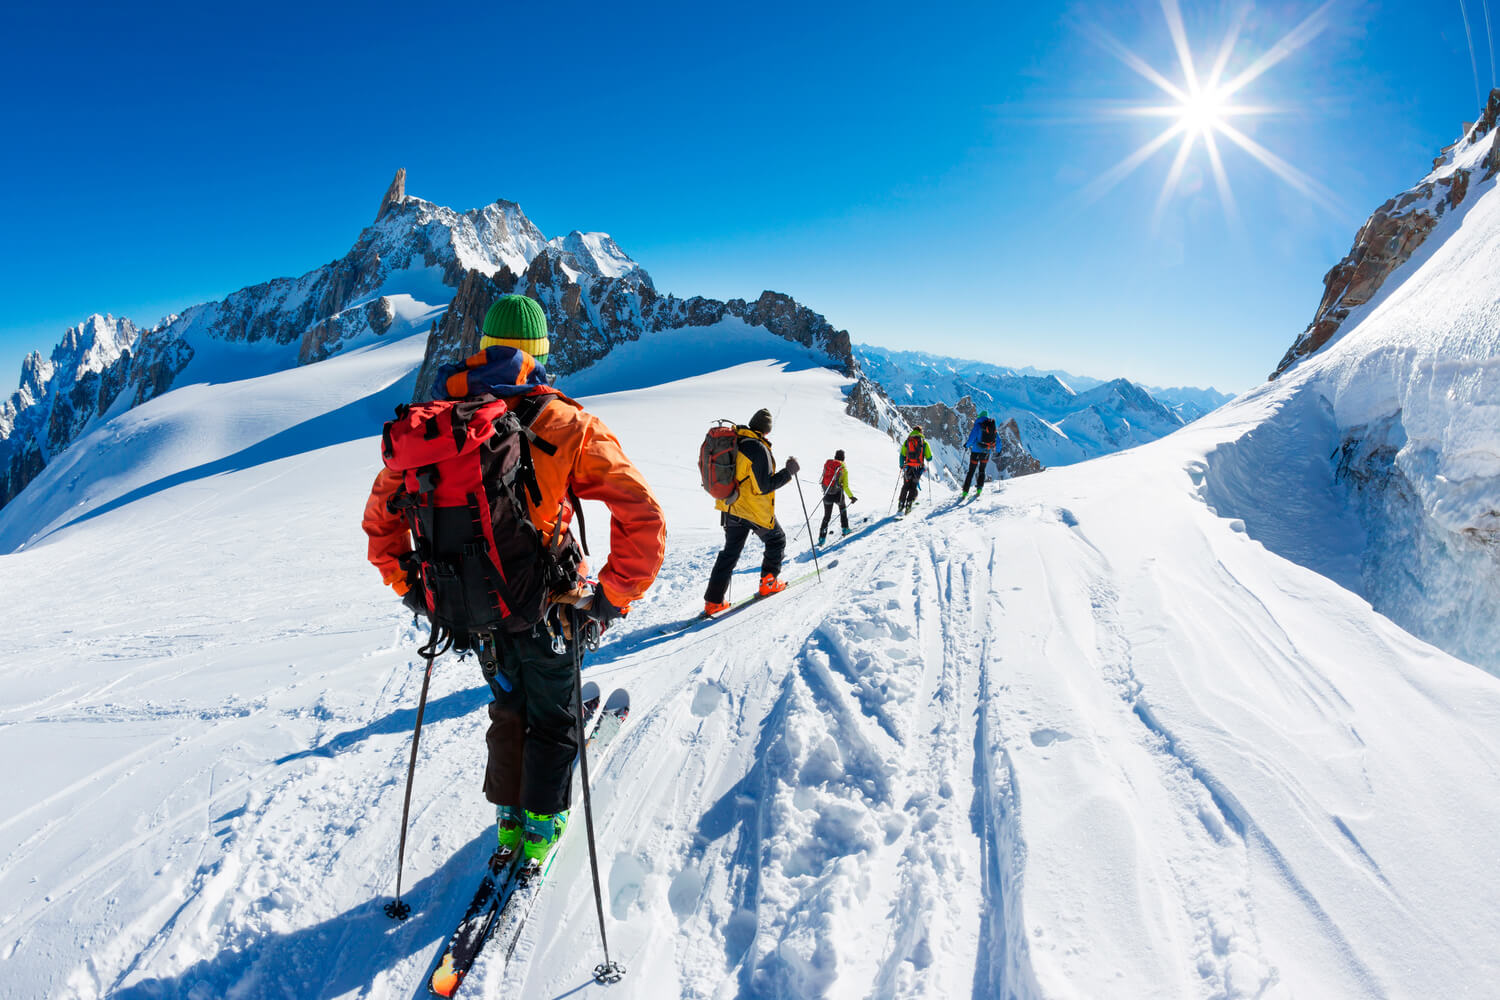 Ski tourers on Mont Blanc with sunshine